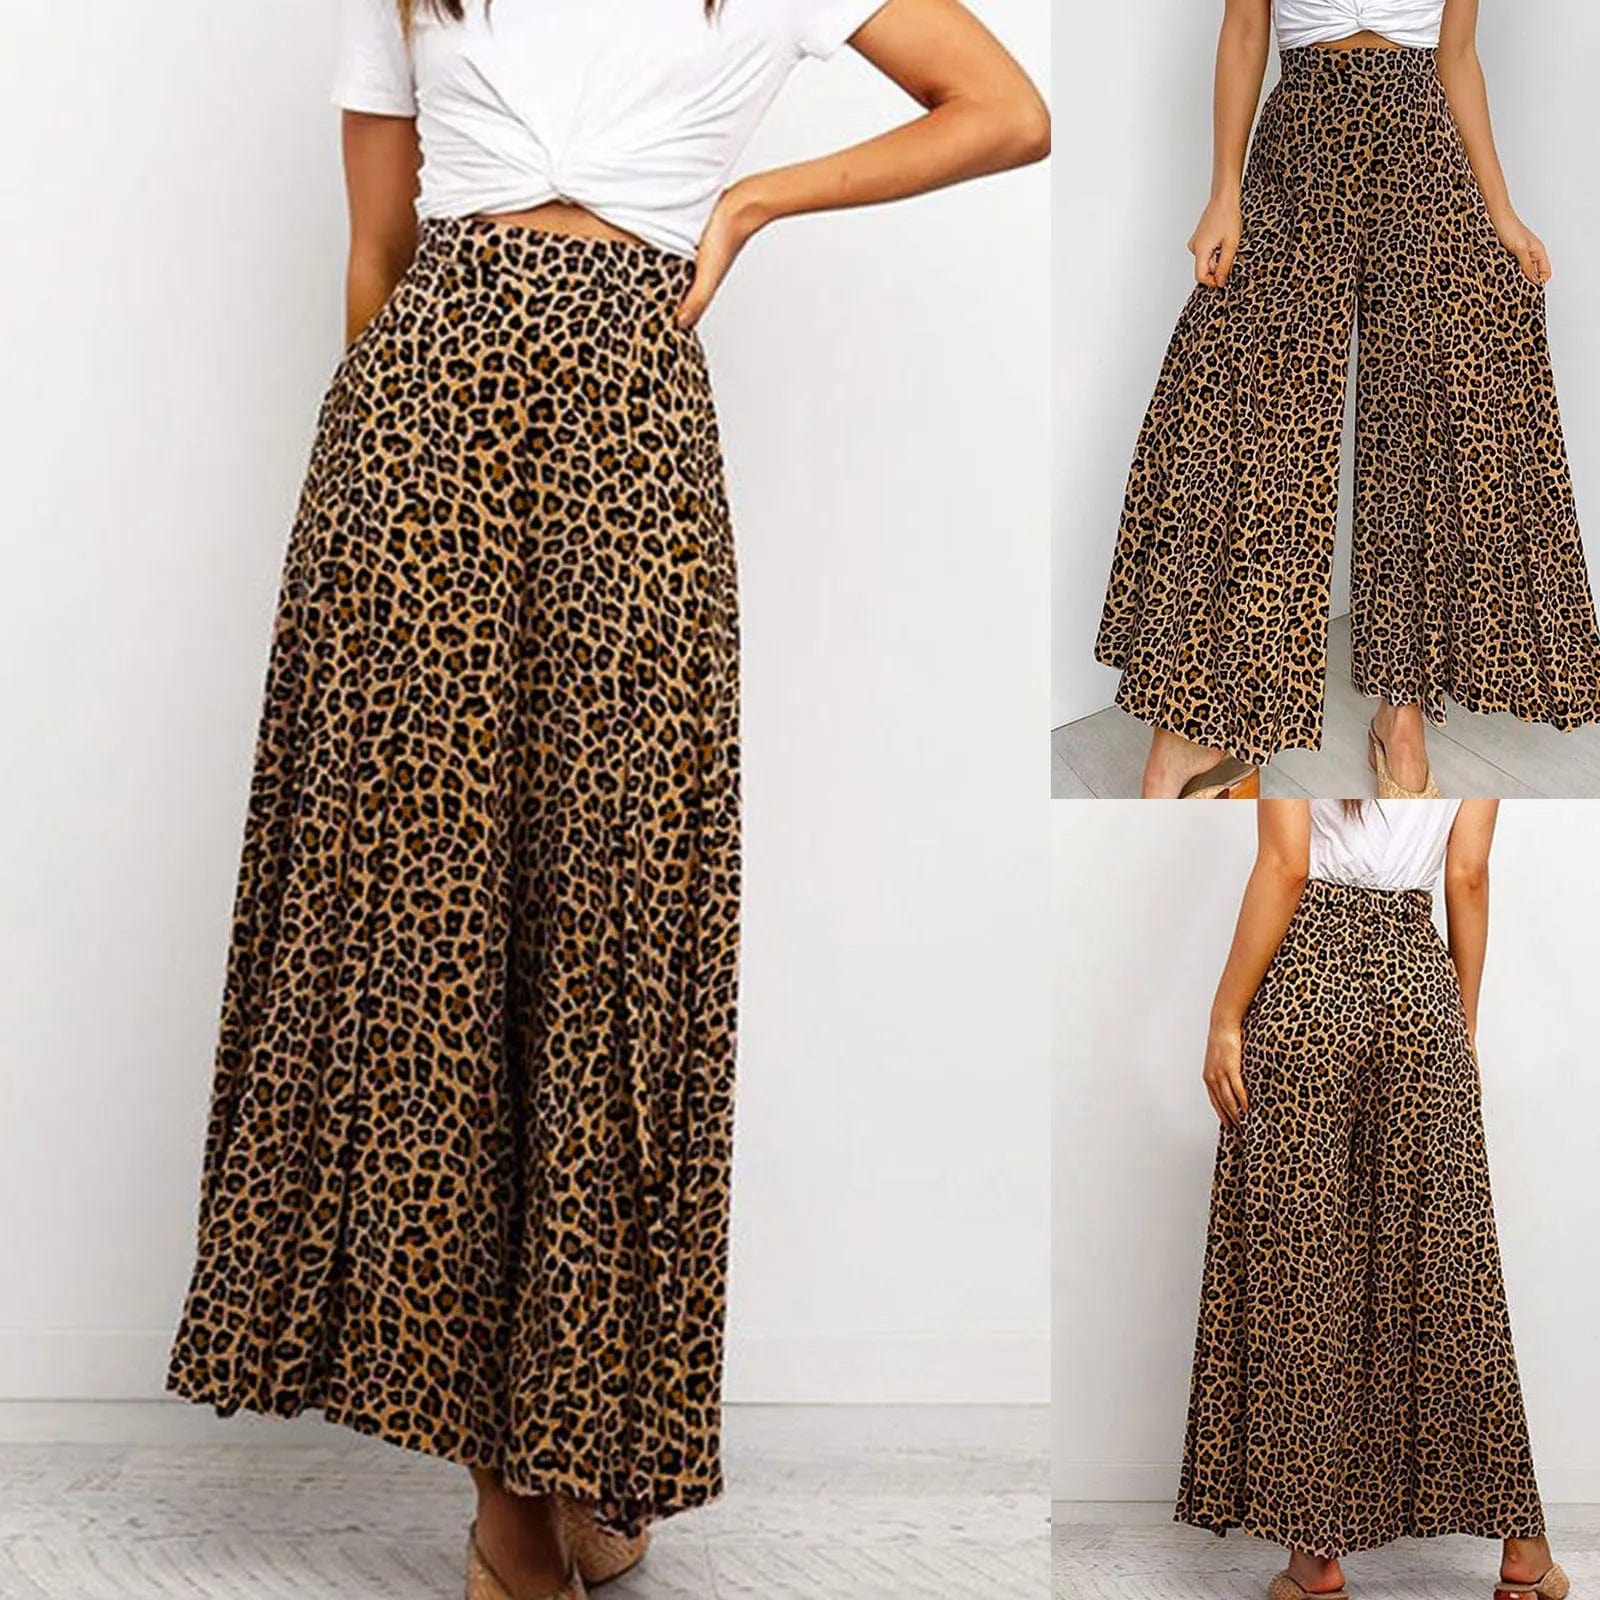 Leopard clothing Cheetah flowy pants